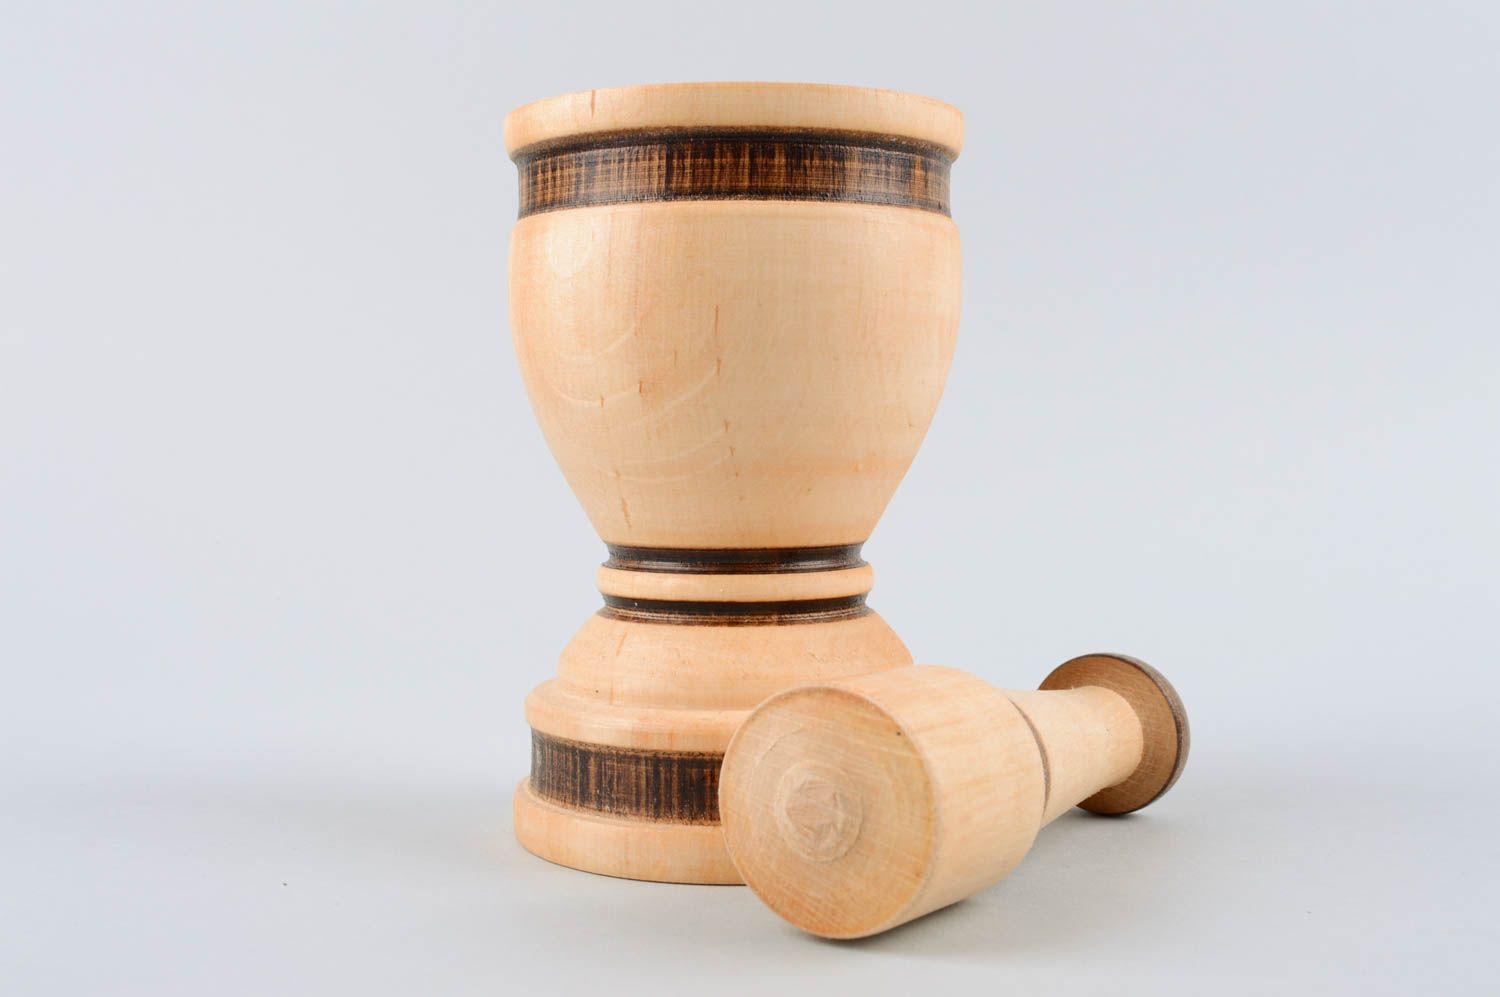 Handmade wooden mortar and pestle wooden hand spice grinder kitchen accessories photo 4